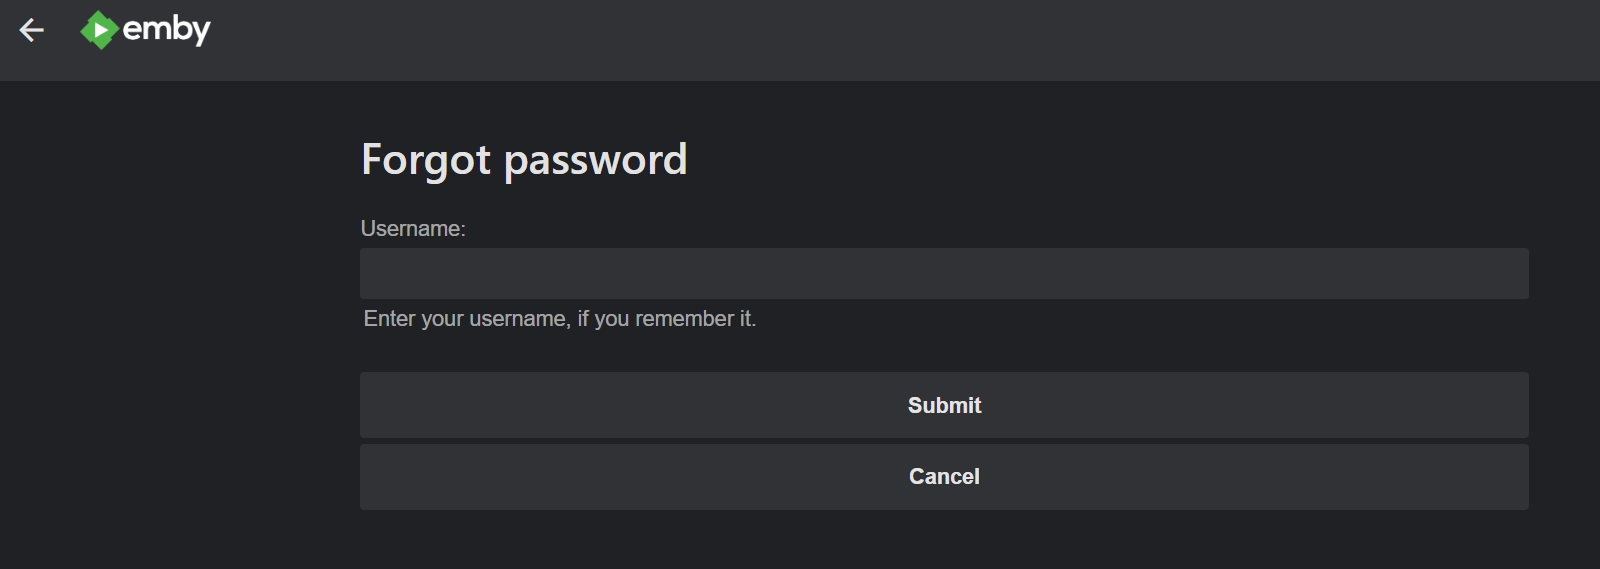 emby client delete password